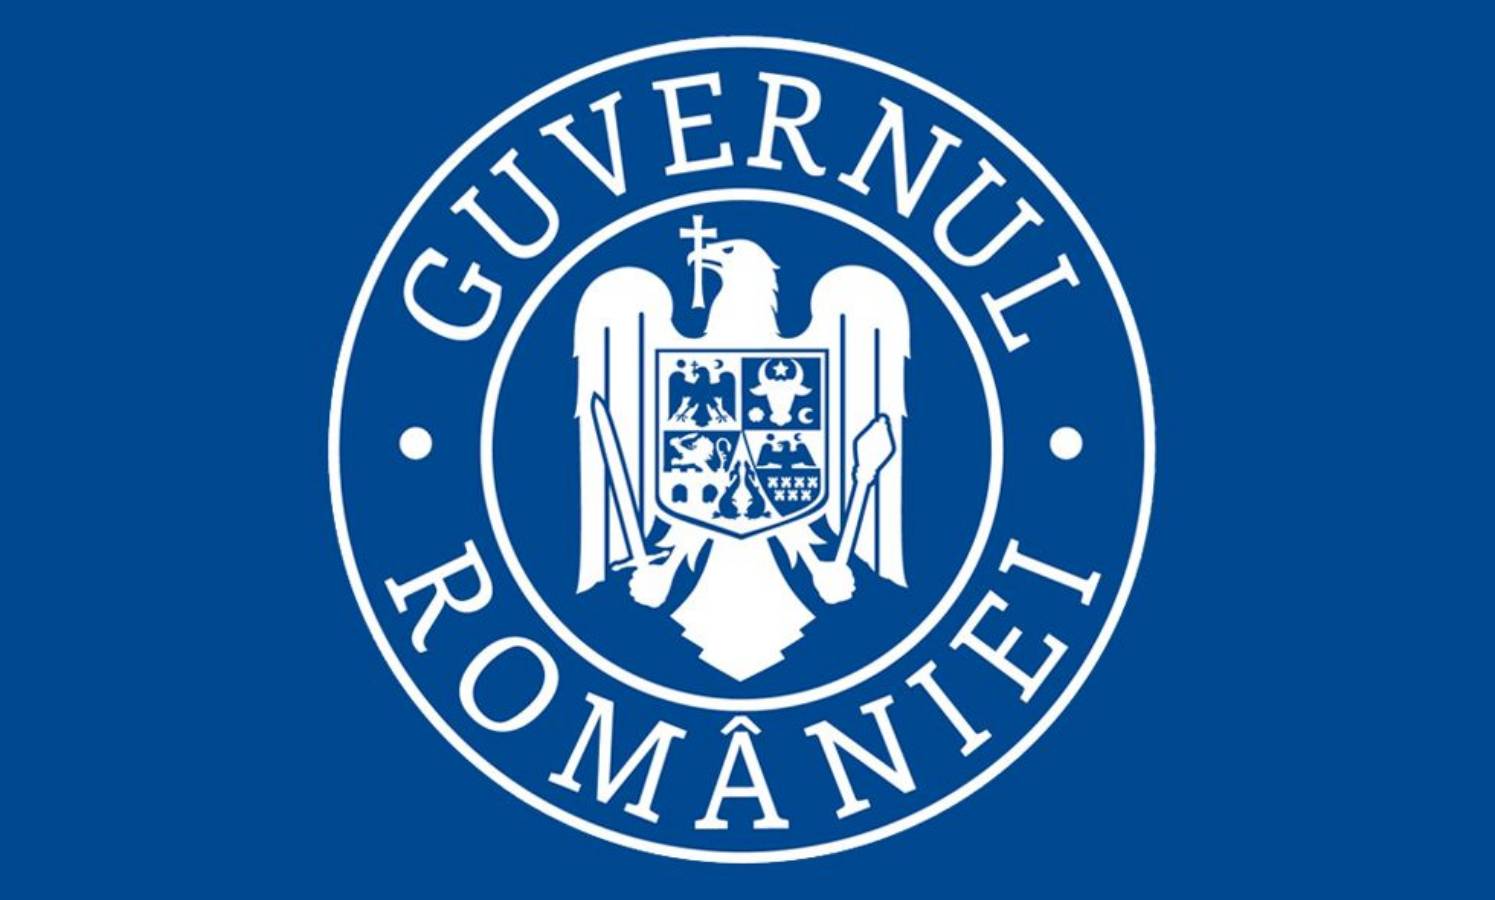 Guvernul Romaniei informare stare urgenta